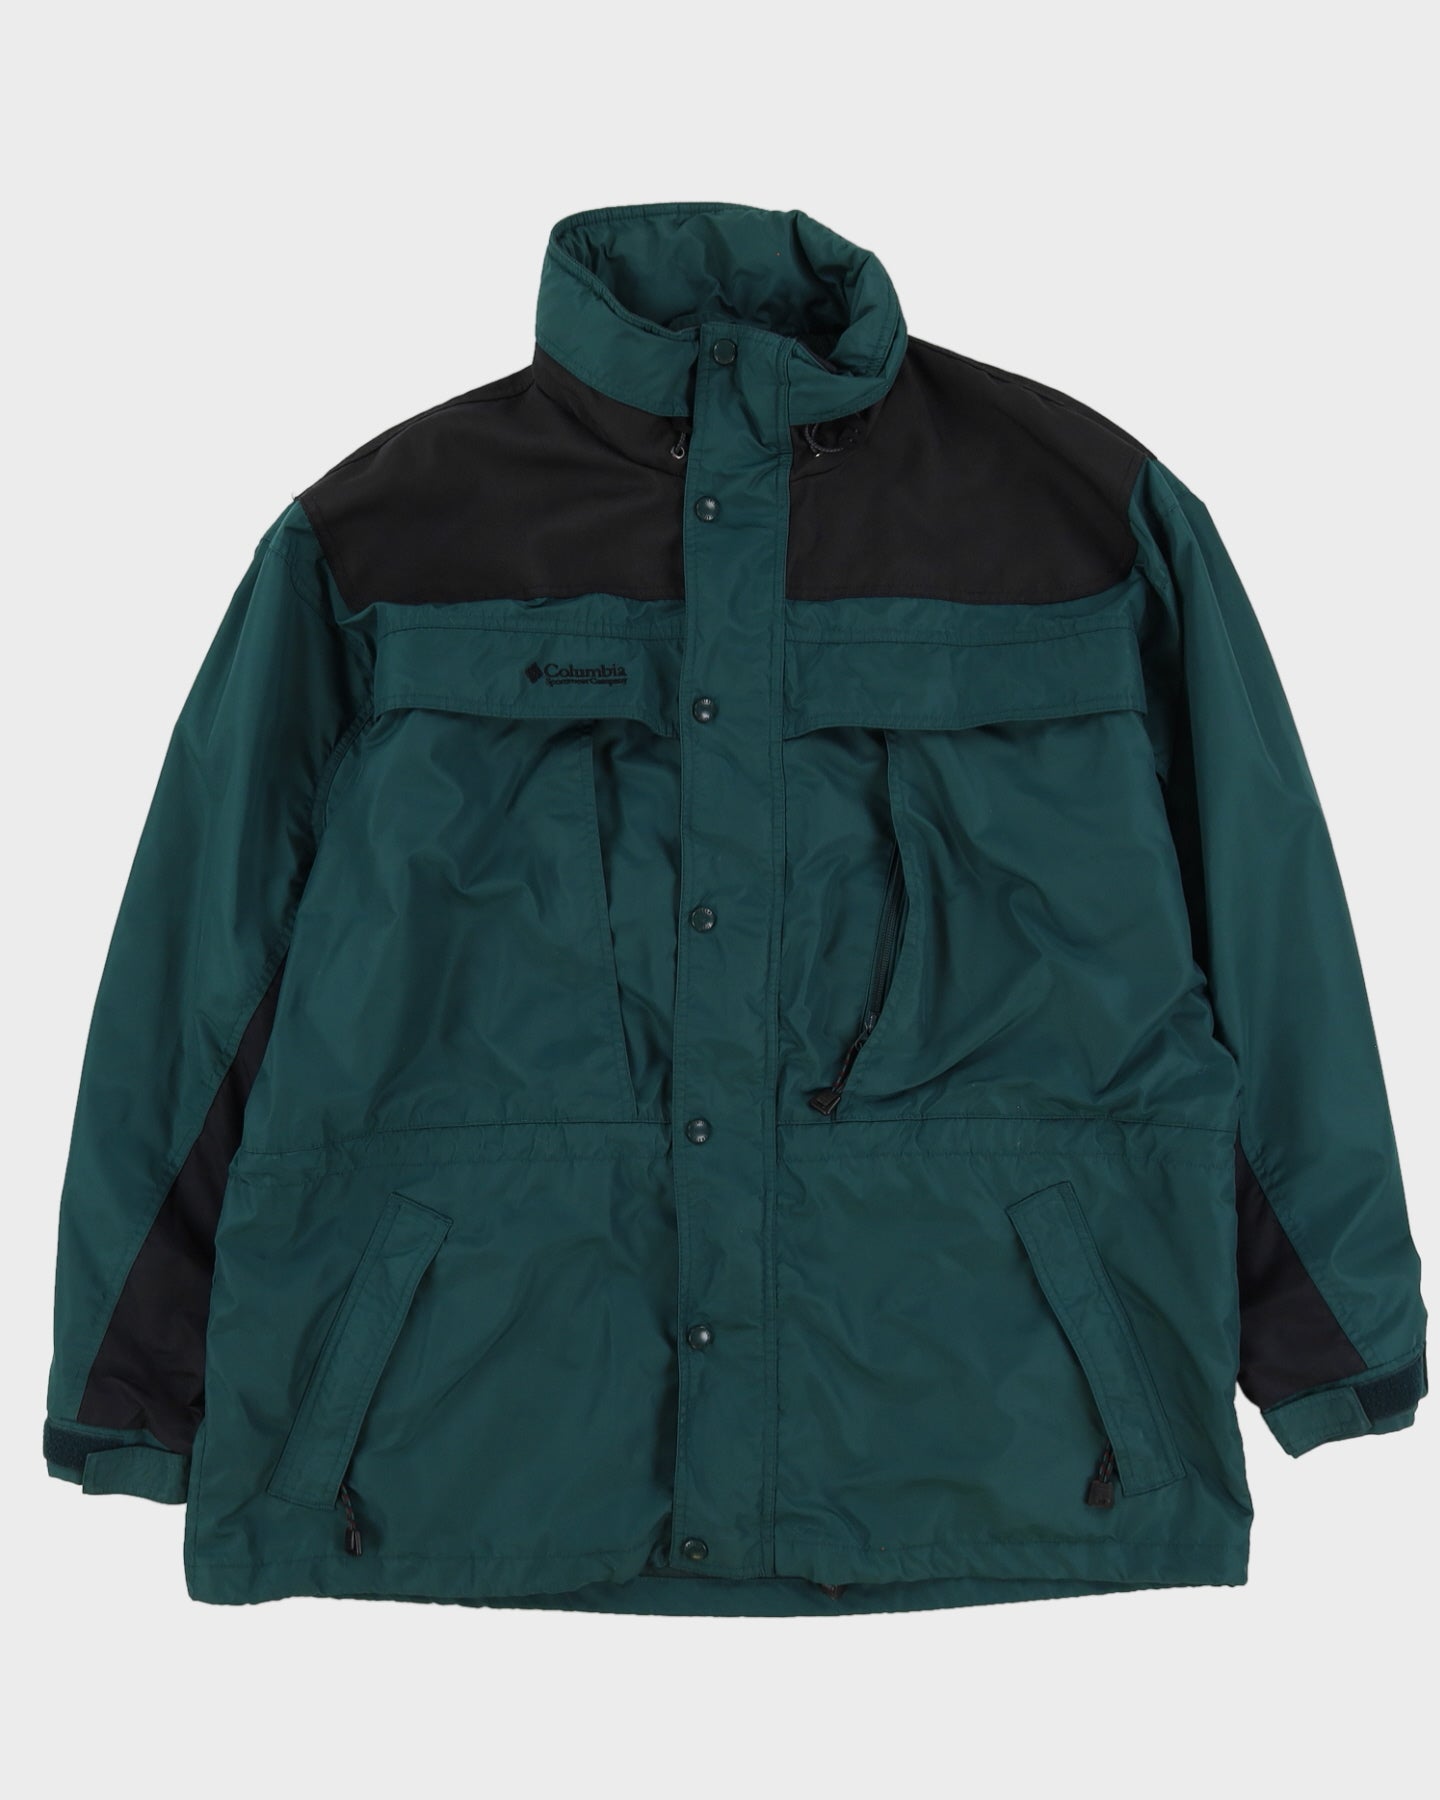 Vintage 90s Columbia Green Ski Jacket - L